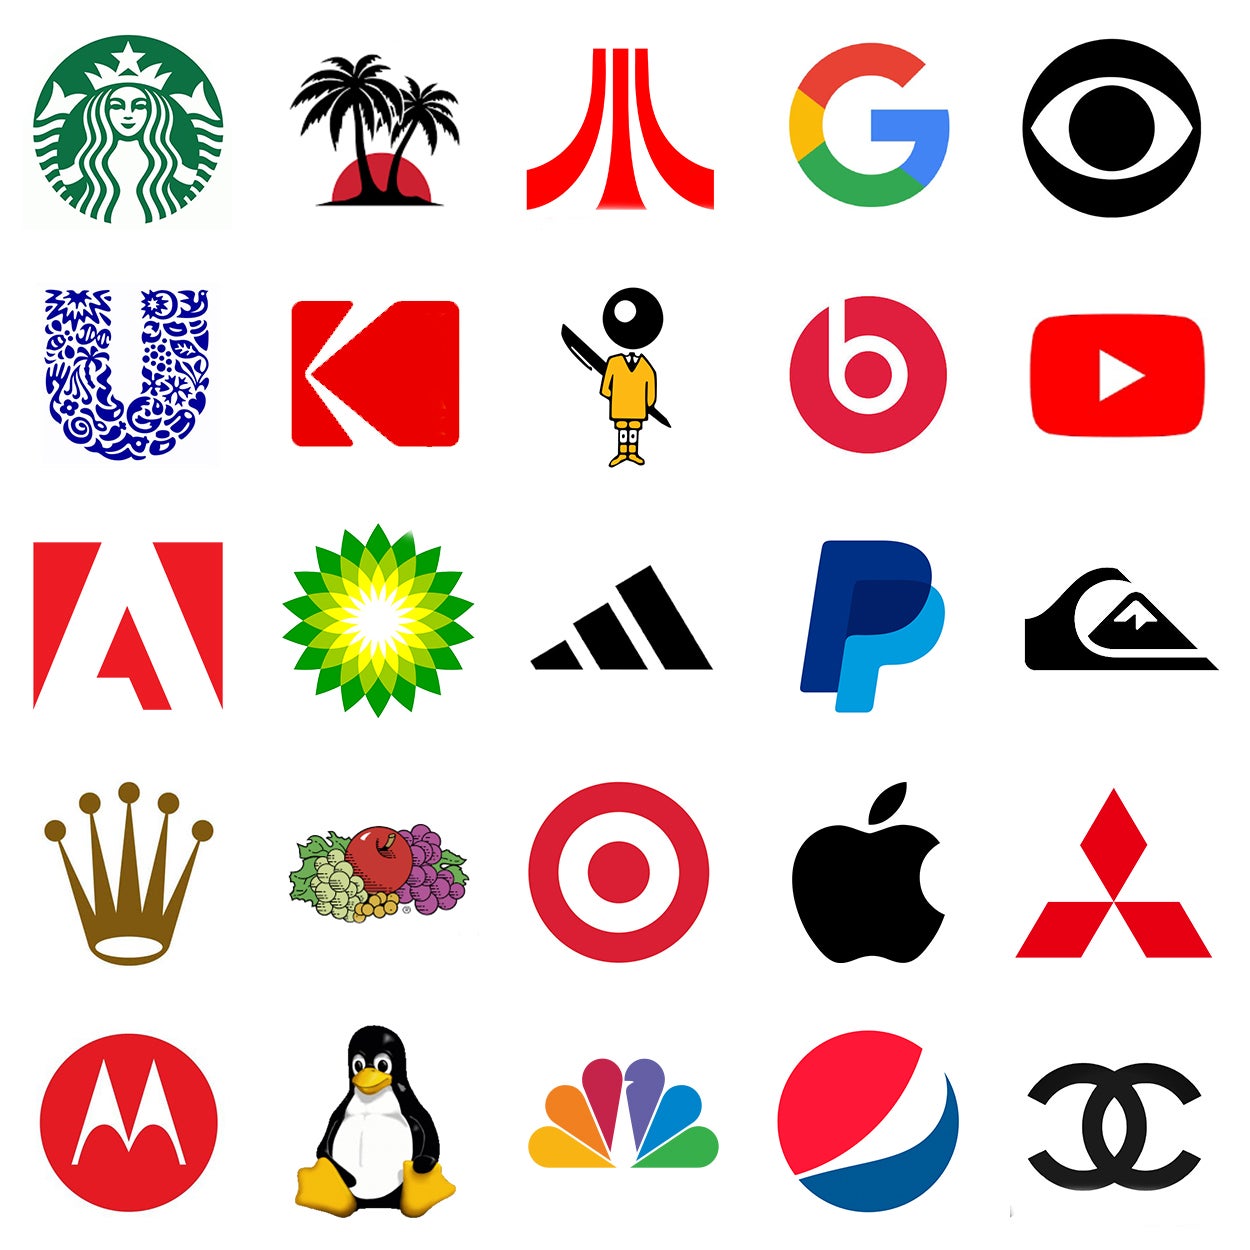 Free Online Logo Quiz: How Many Logos Do You Know? - TriviaCreator